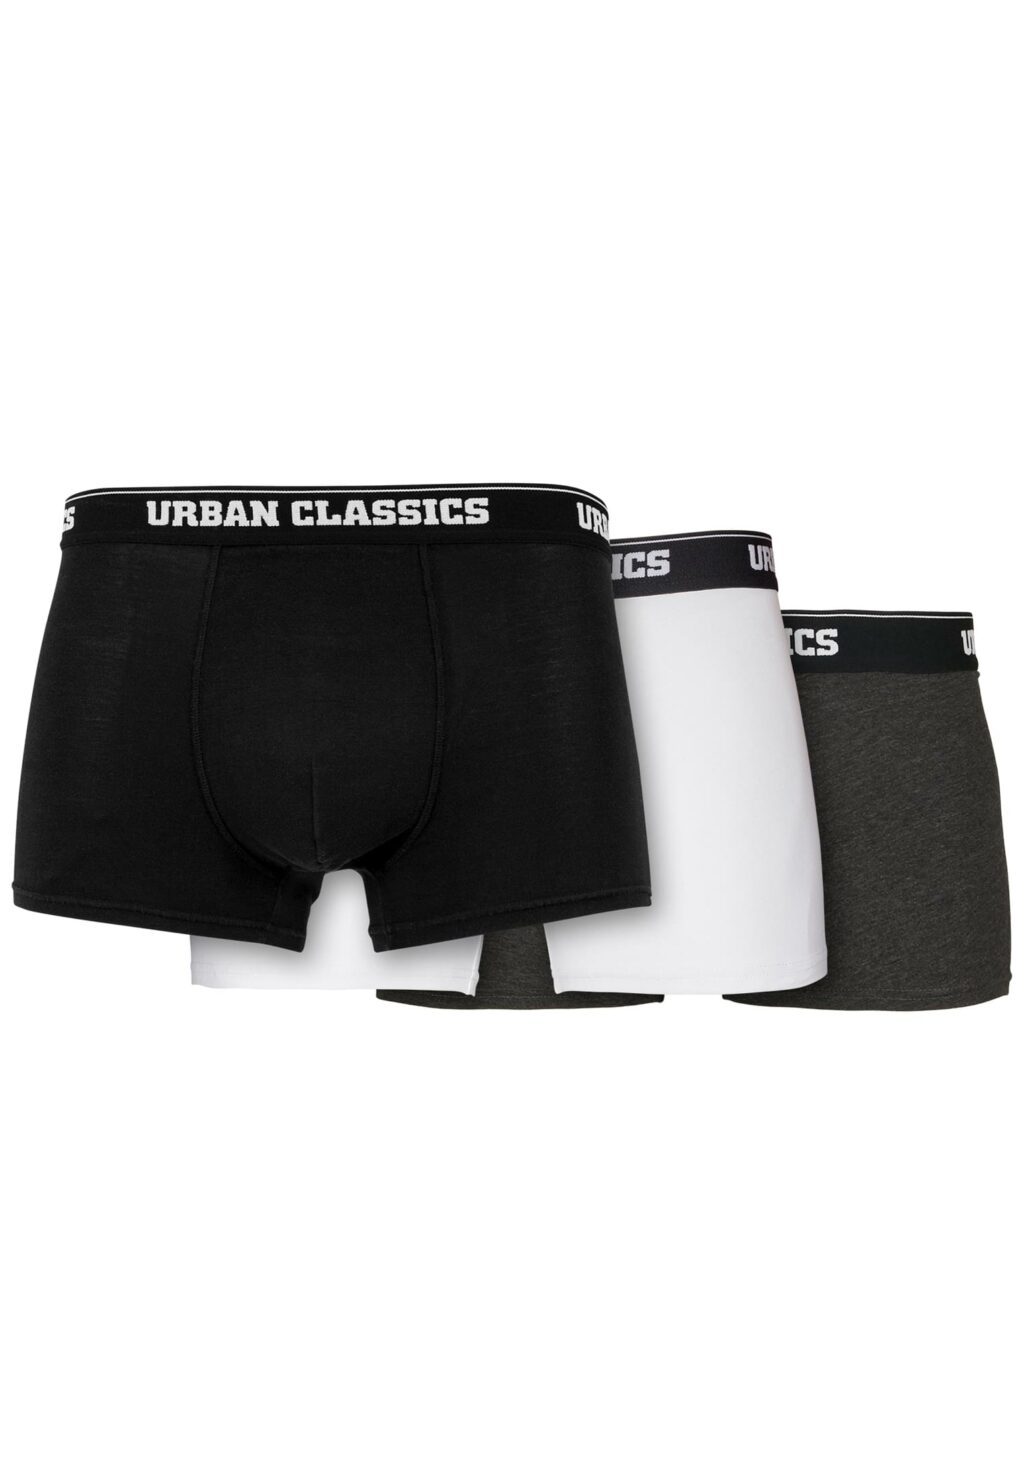 Urban Classics Men Boxer Shorts 3-Pack blk/wht/gry PP1277